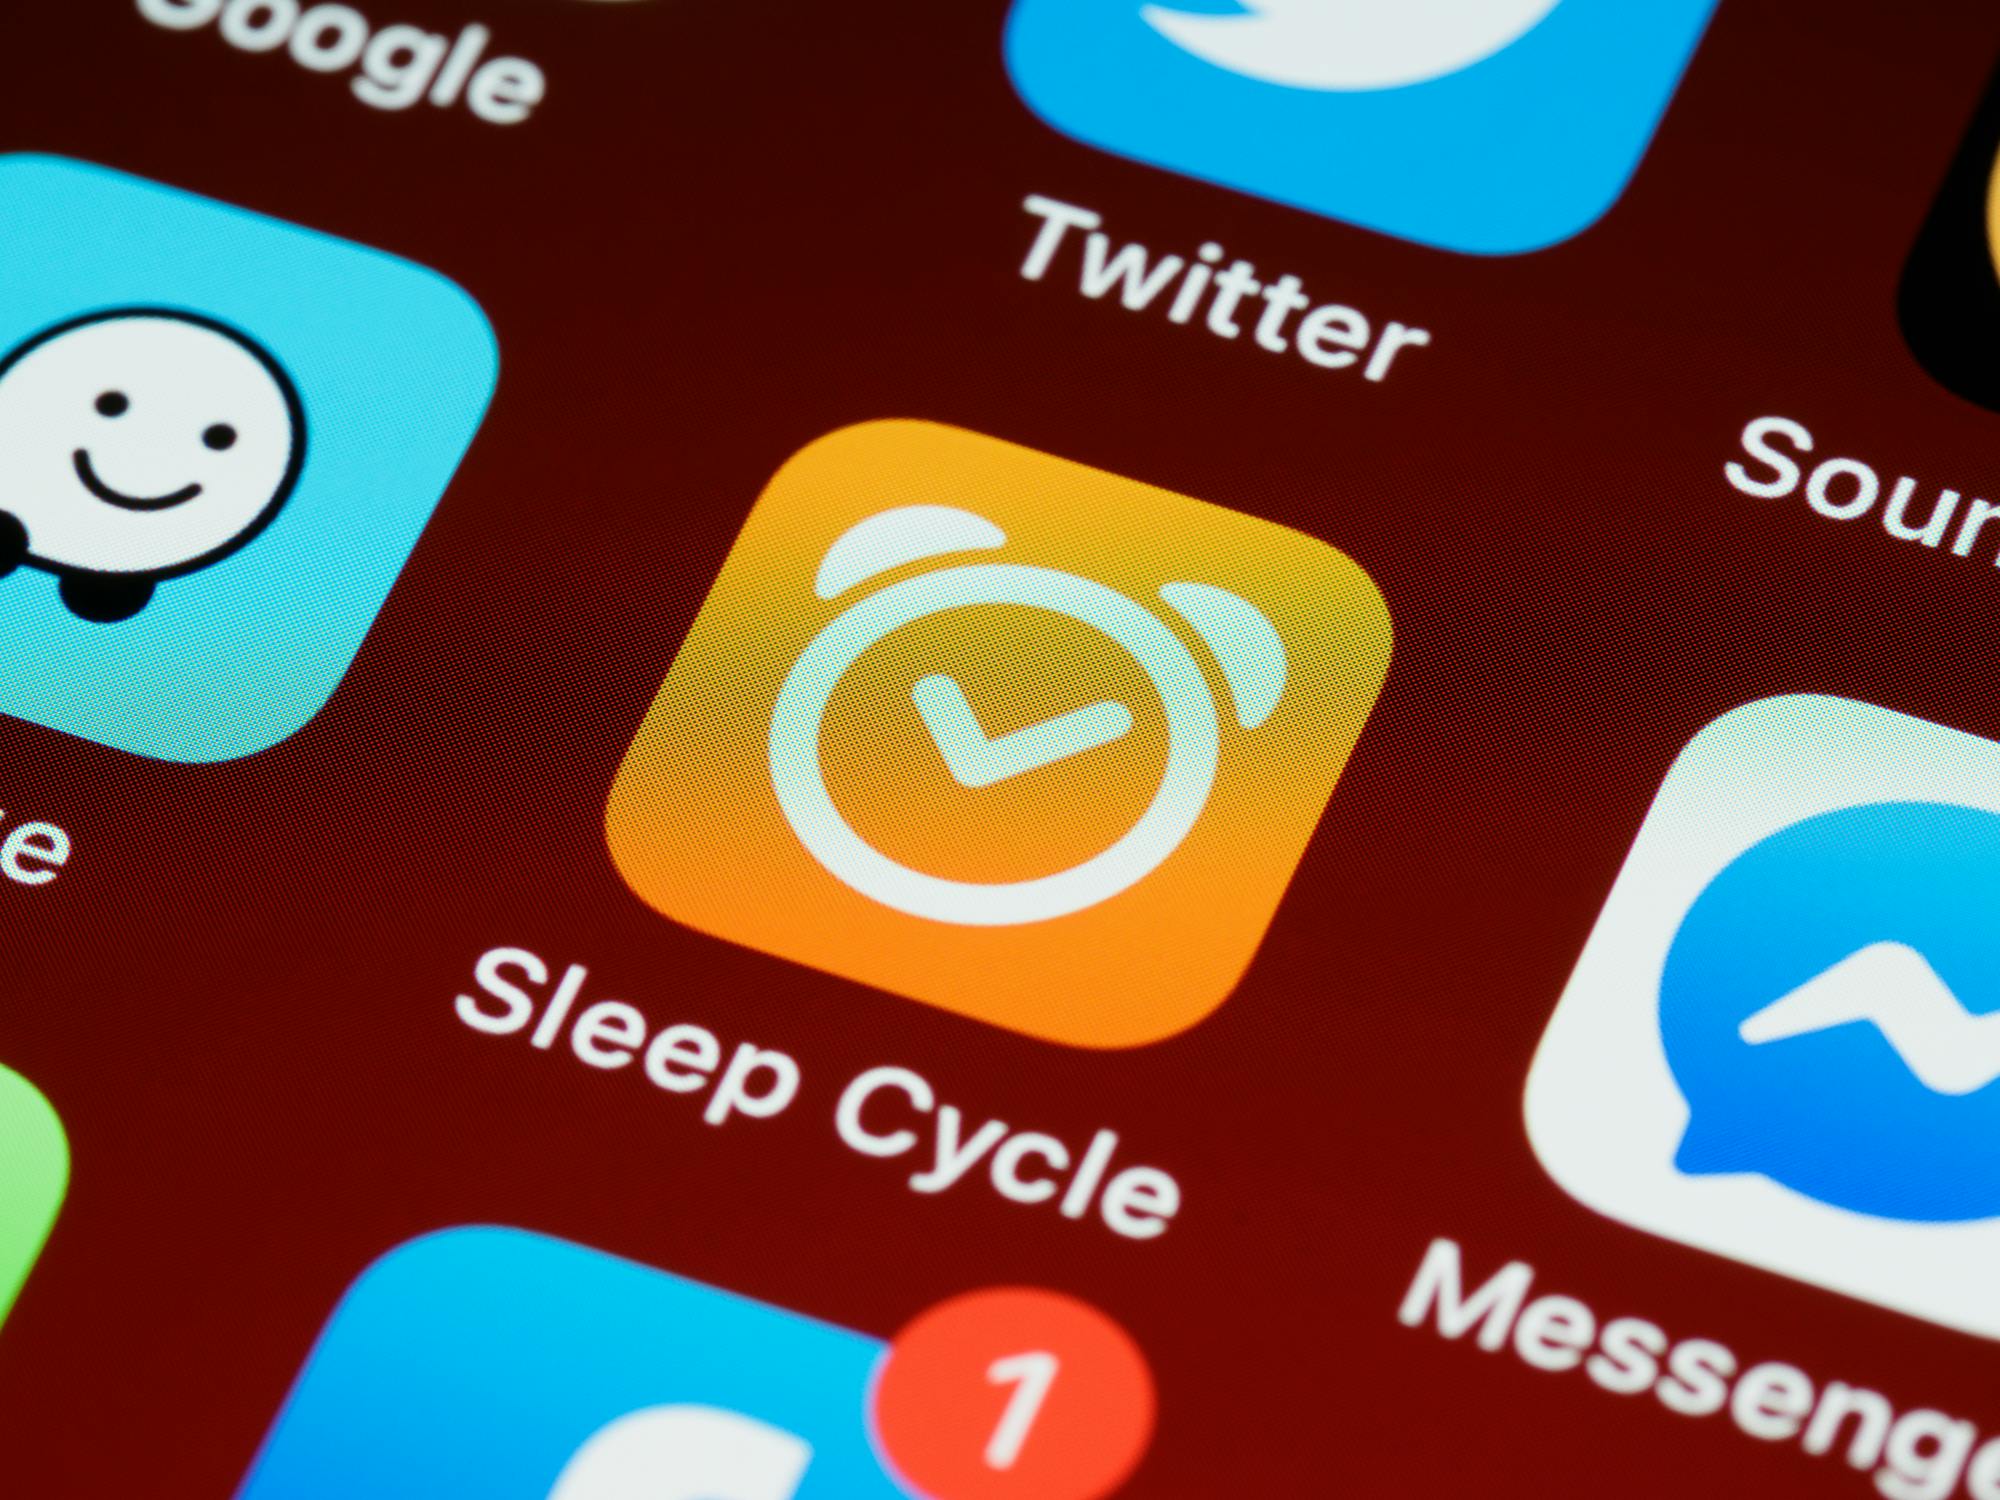 Phone Sleep Cycle App